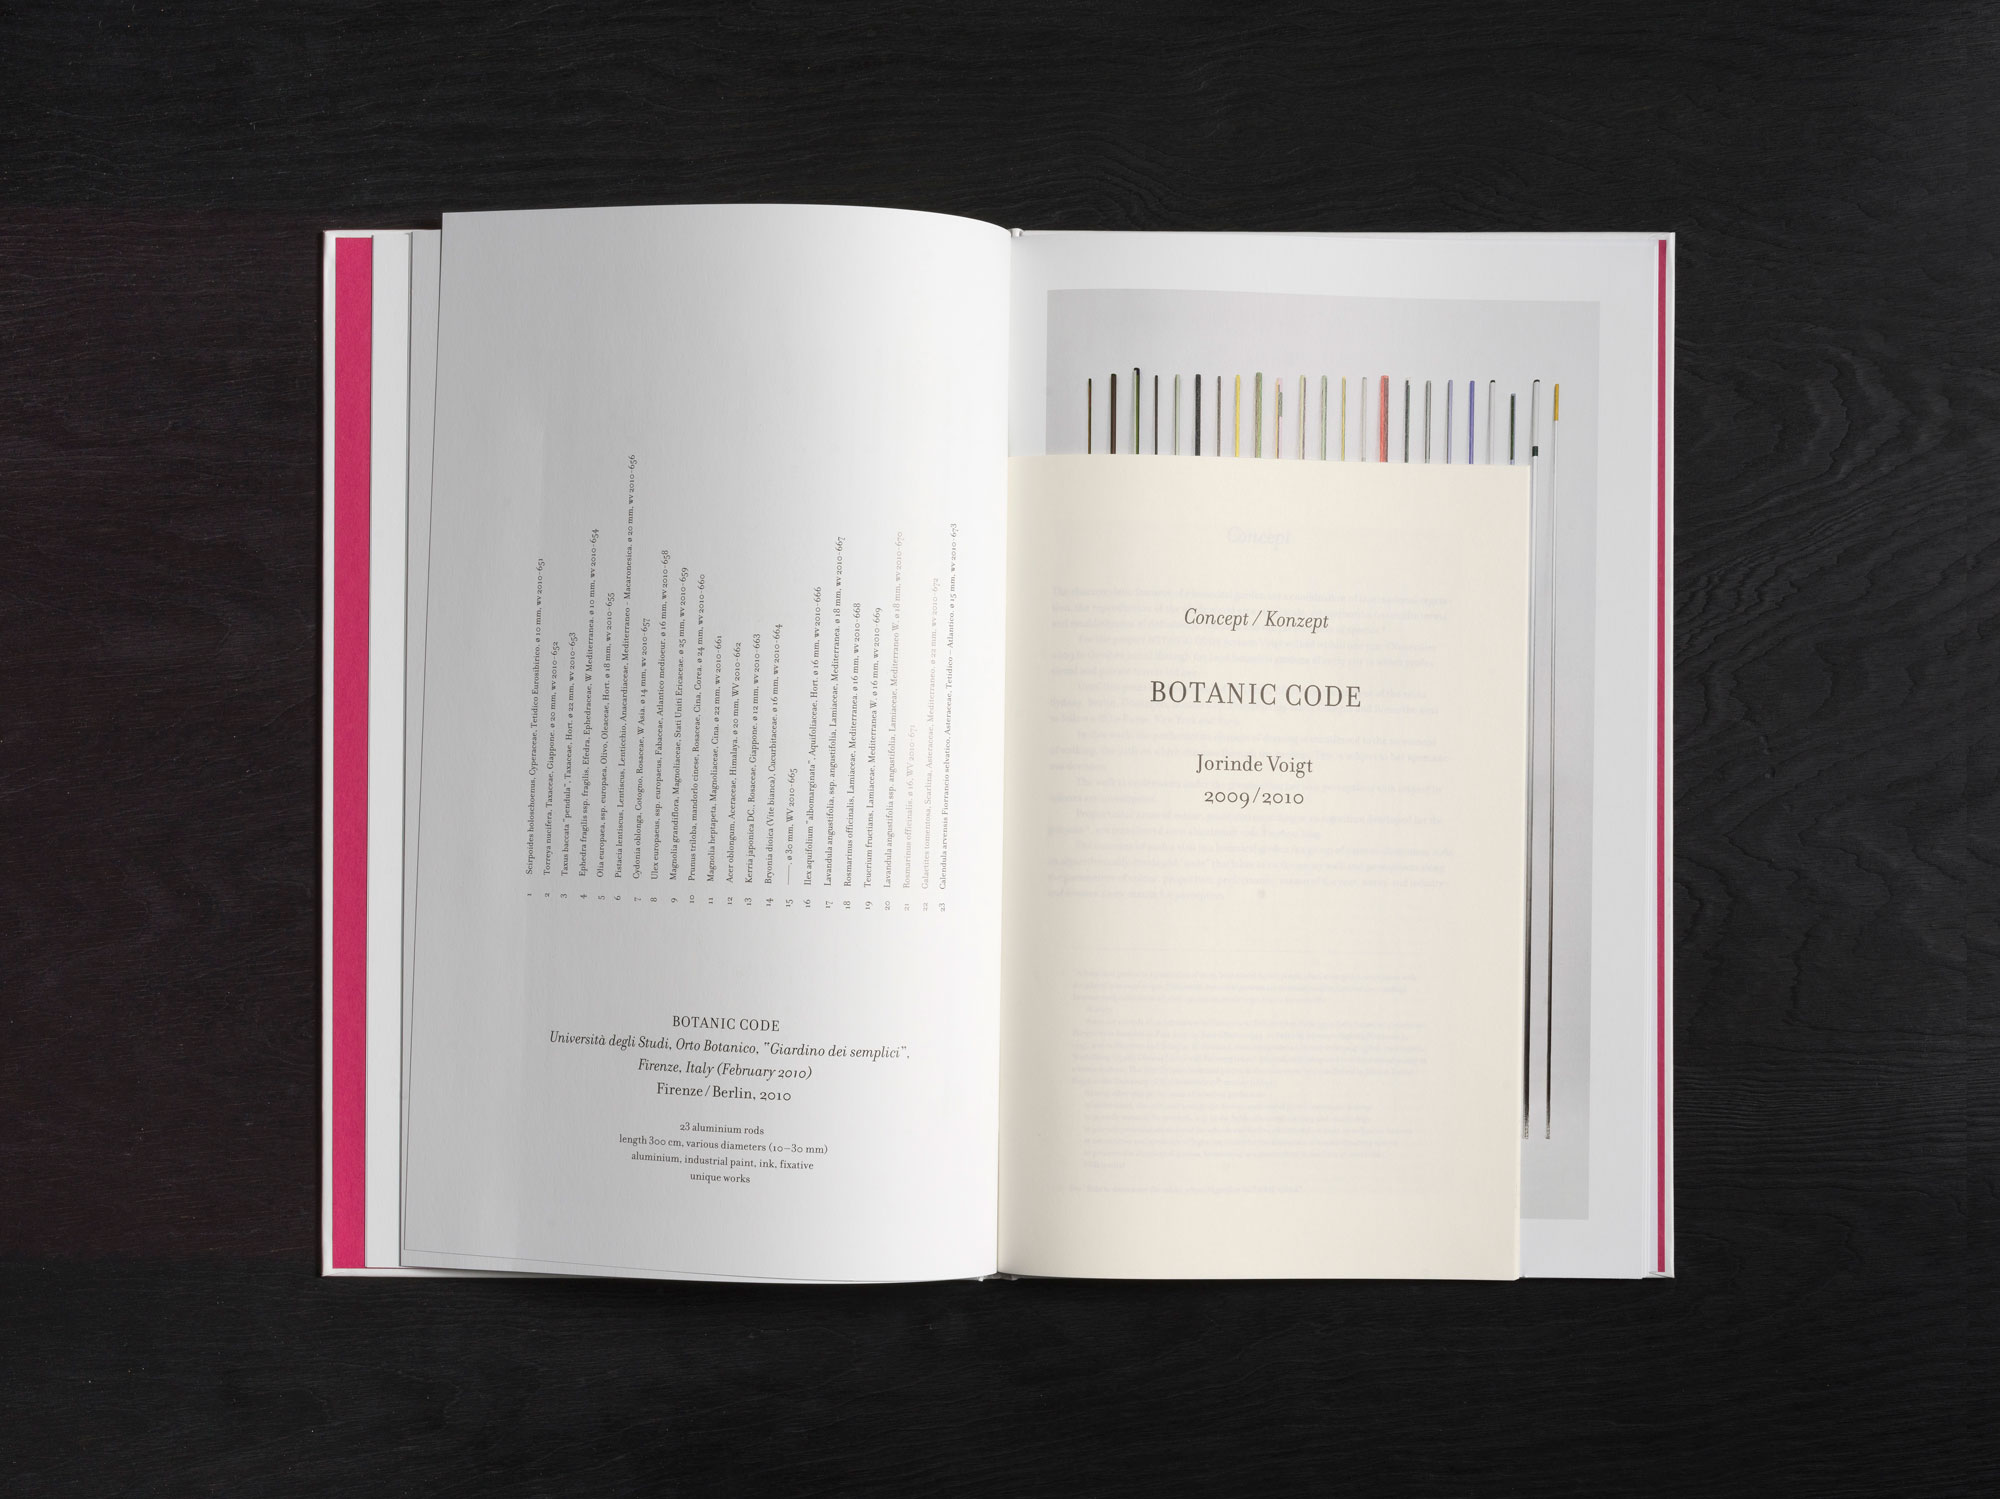 Jorinde Voigt – Botanic Code, Kienbaum Artists’ Books 2011 Edition, Editor: Jochen Kienbaum, Text: Jorinde Voigt, Language: German, total pages: 50, Publishing: Snoeck Verlagsgesellschaft, Köln ISBN: 978-3-940953-61-2, Price: €29,90.